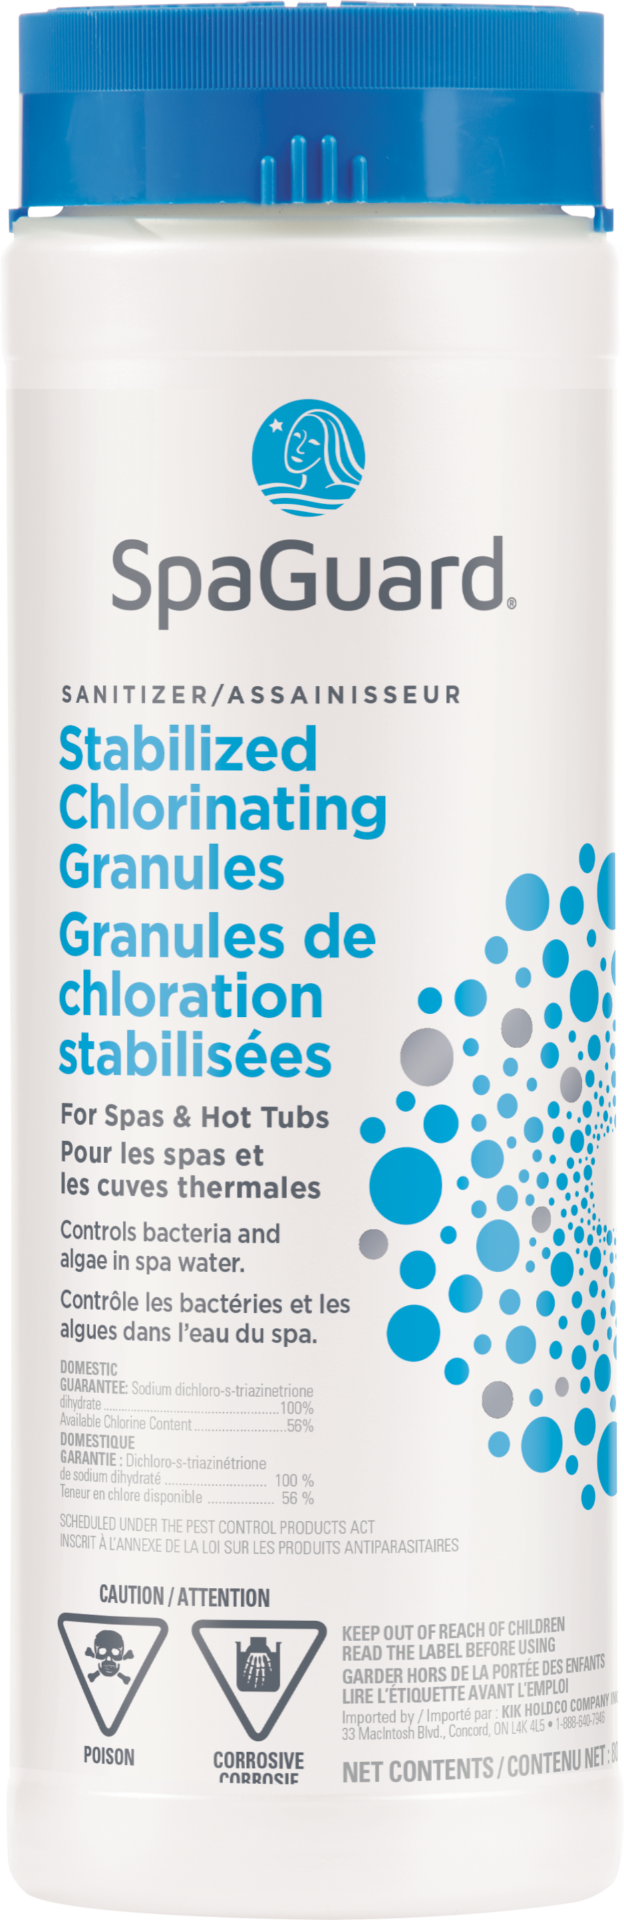 SpaGuard Stabilized Chlorinating Granules 800g - SPAGUARD STABILIZED CHLORINATING GRANULES - 800g